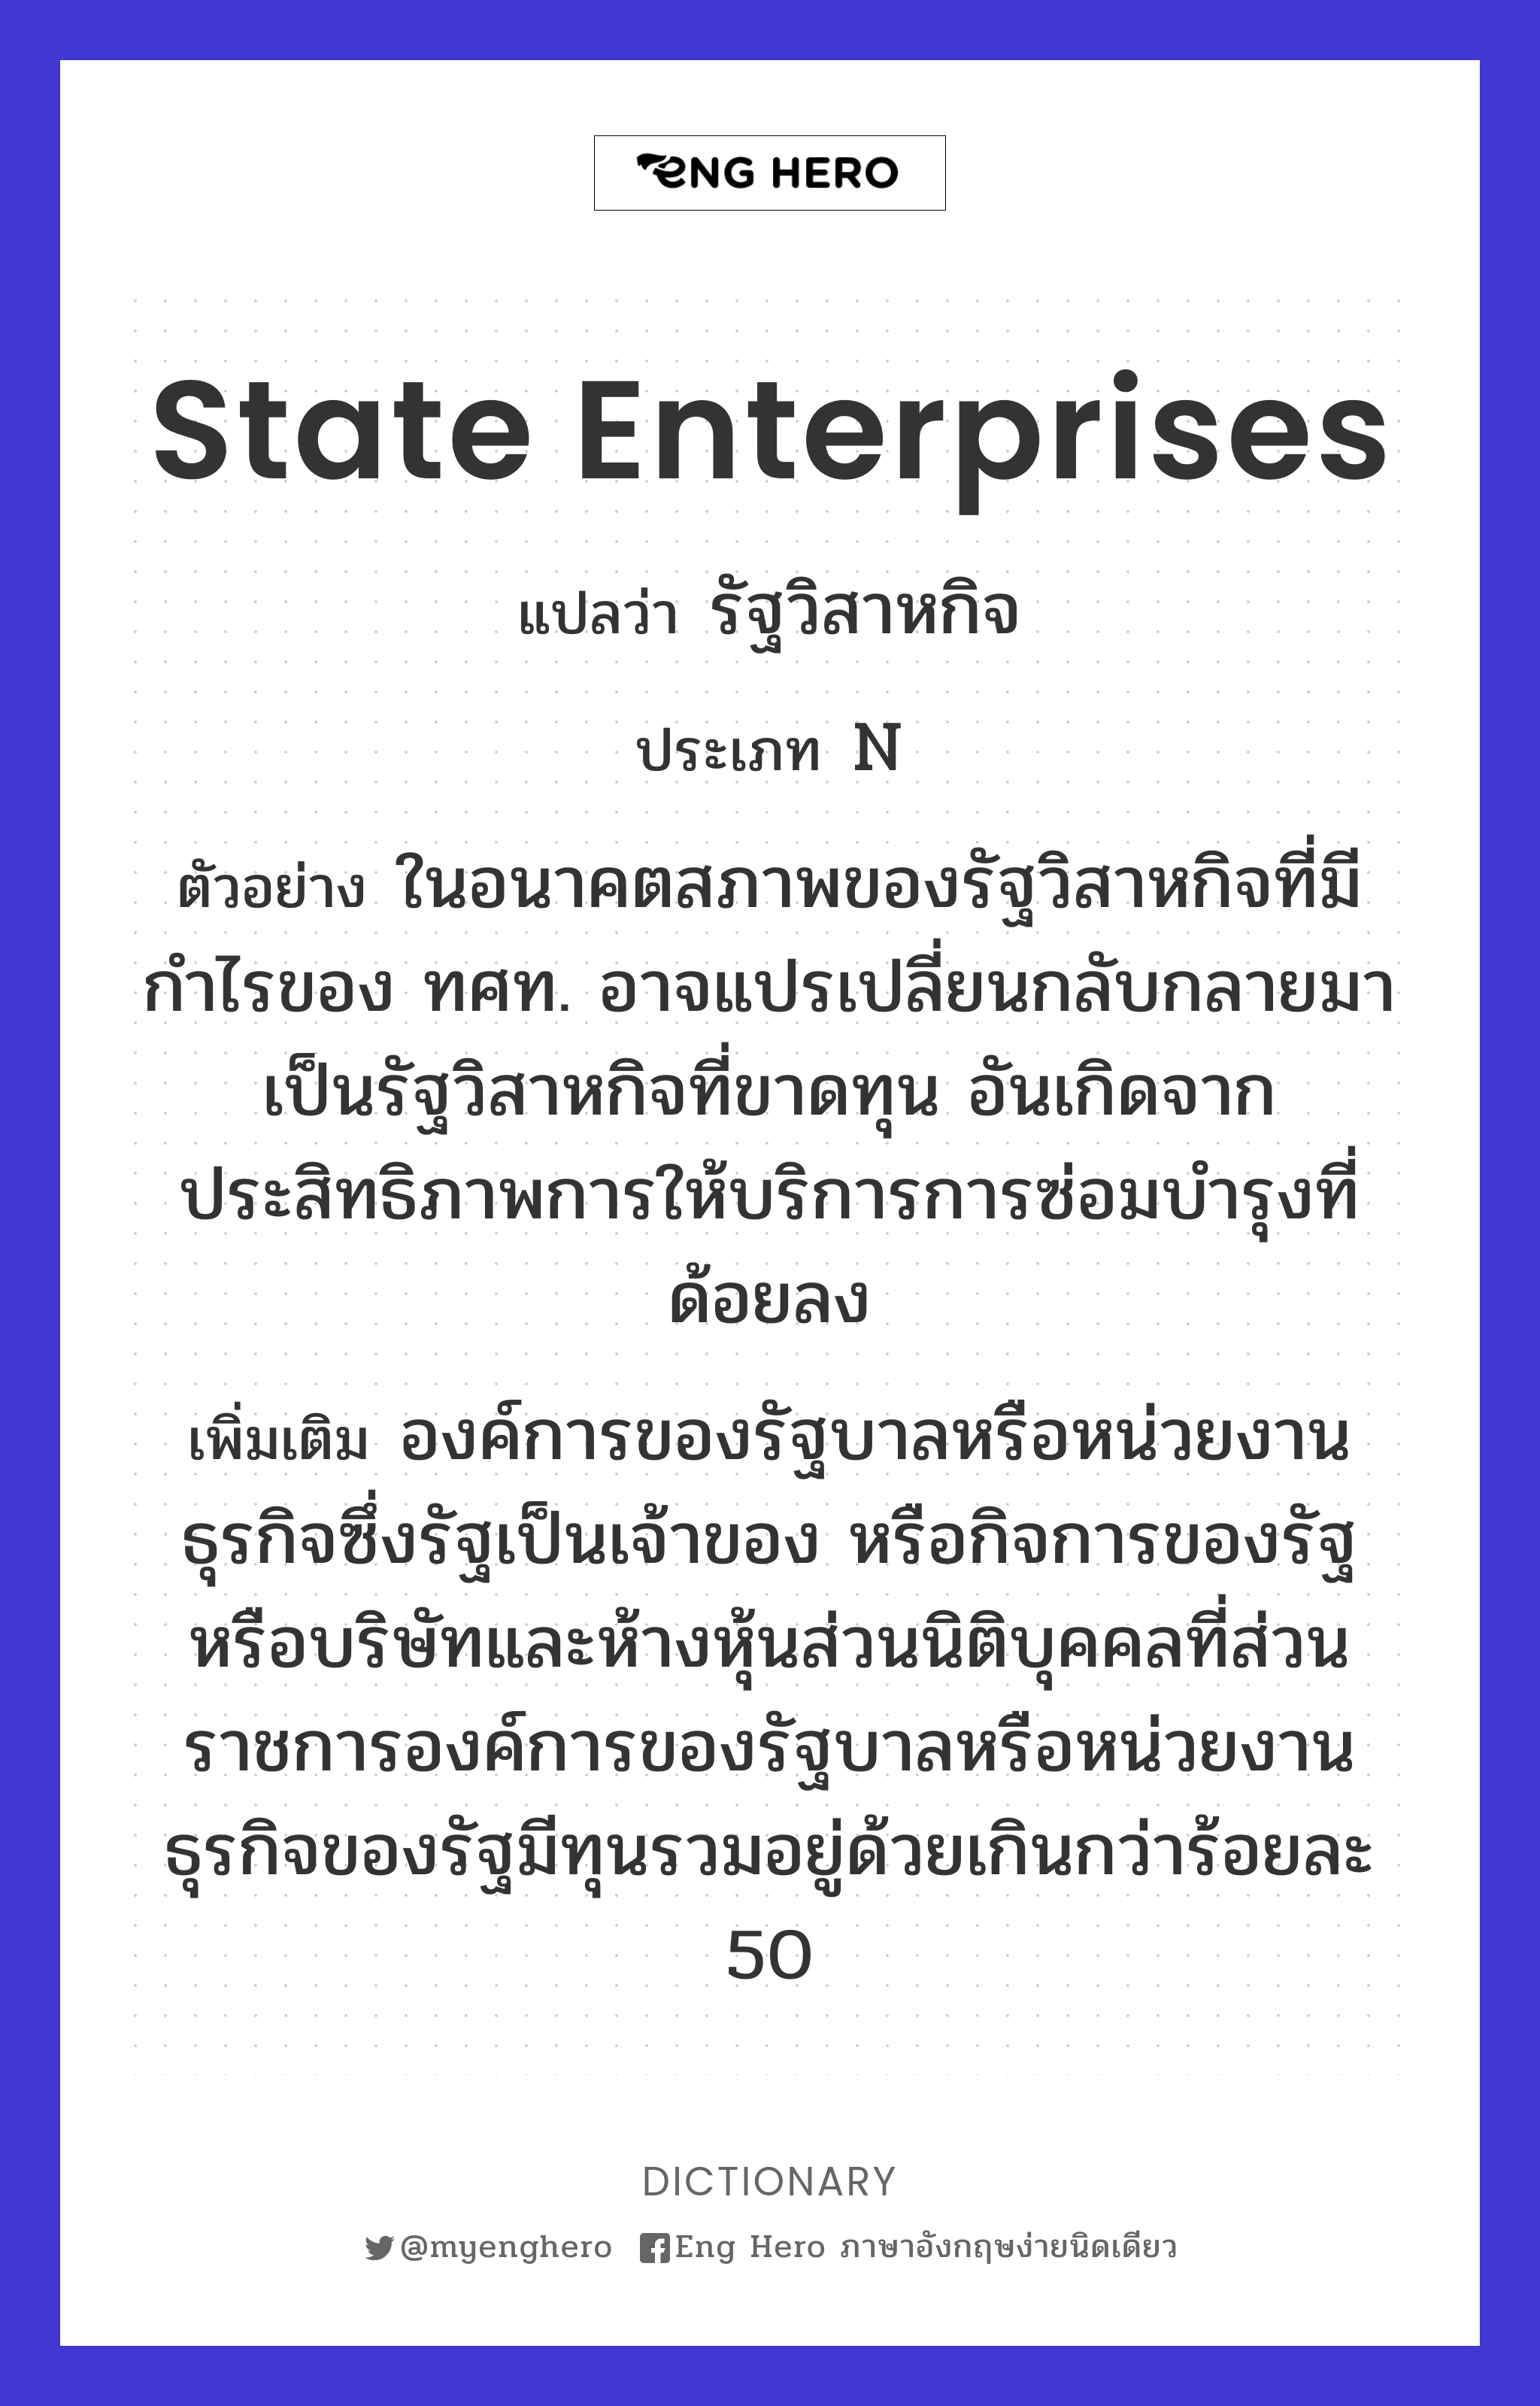 State Enterprises